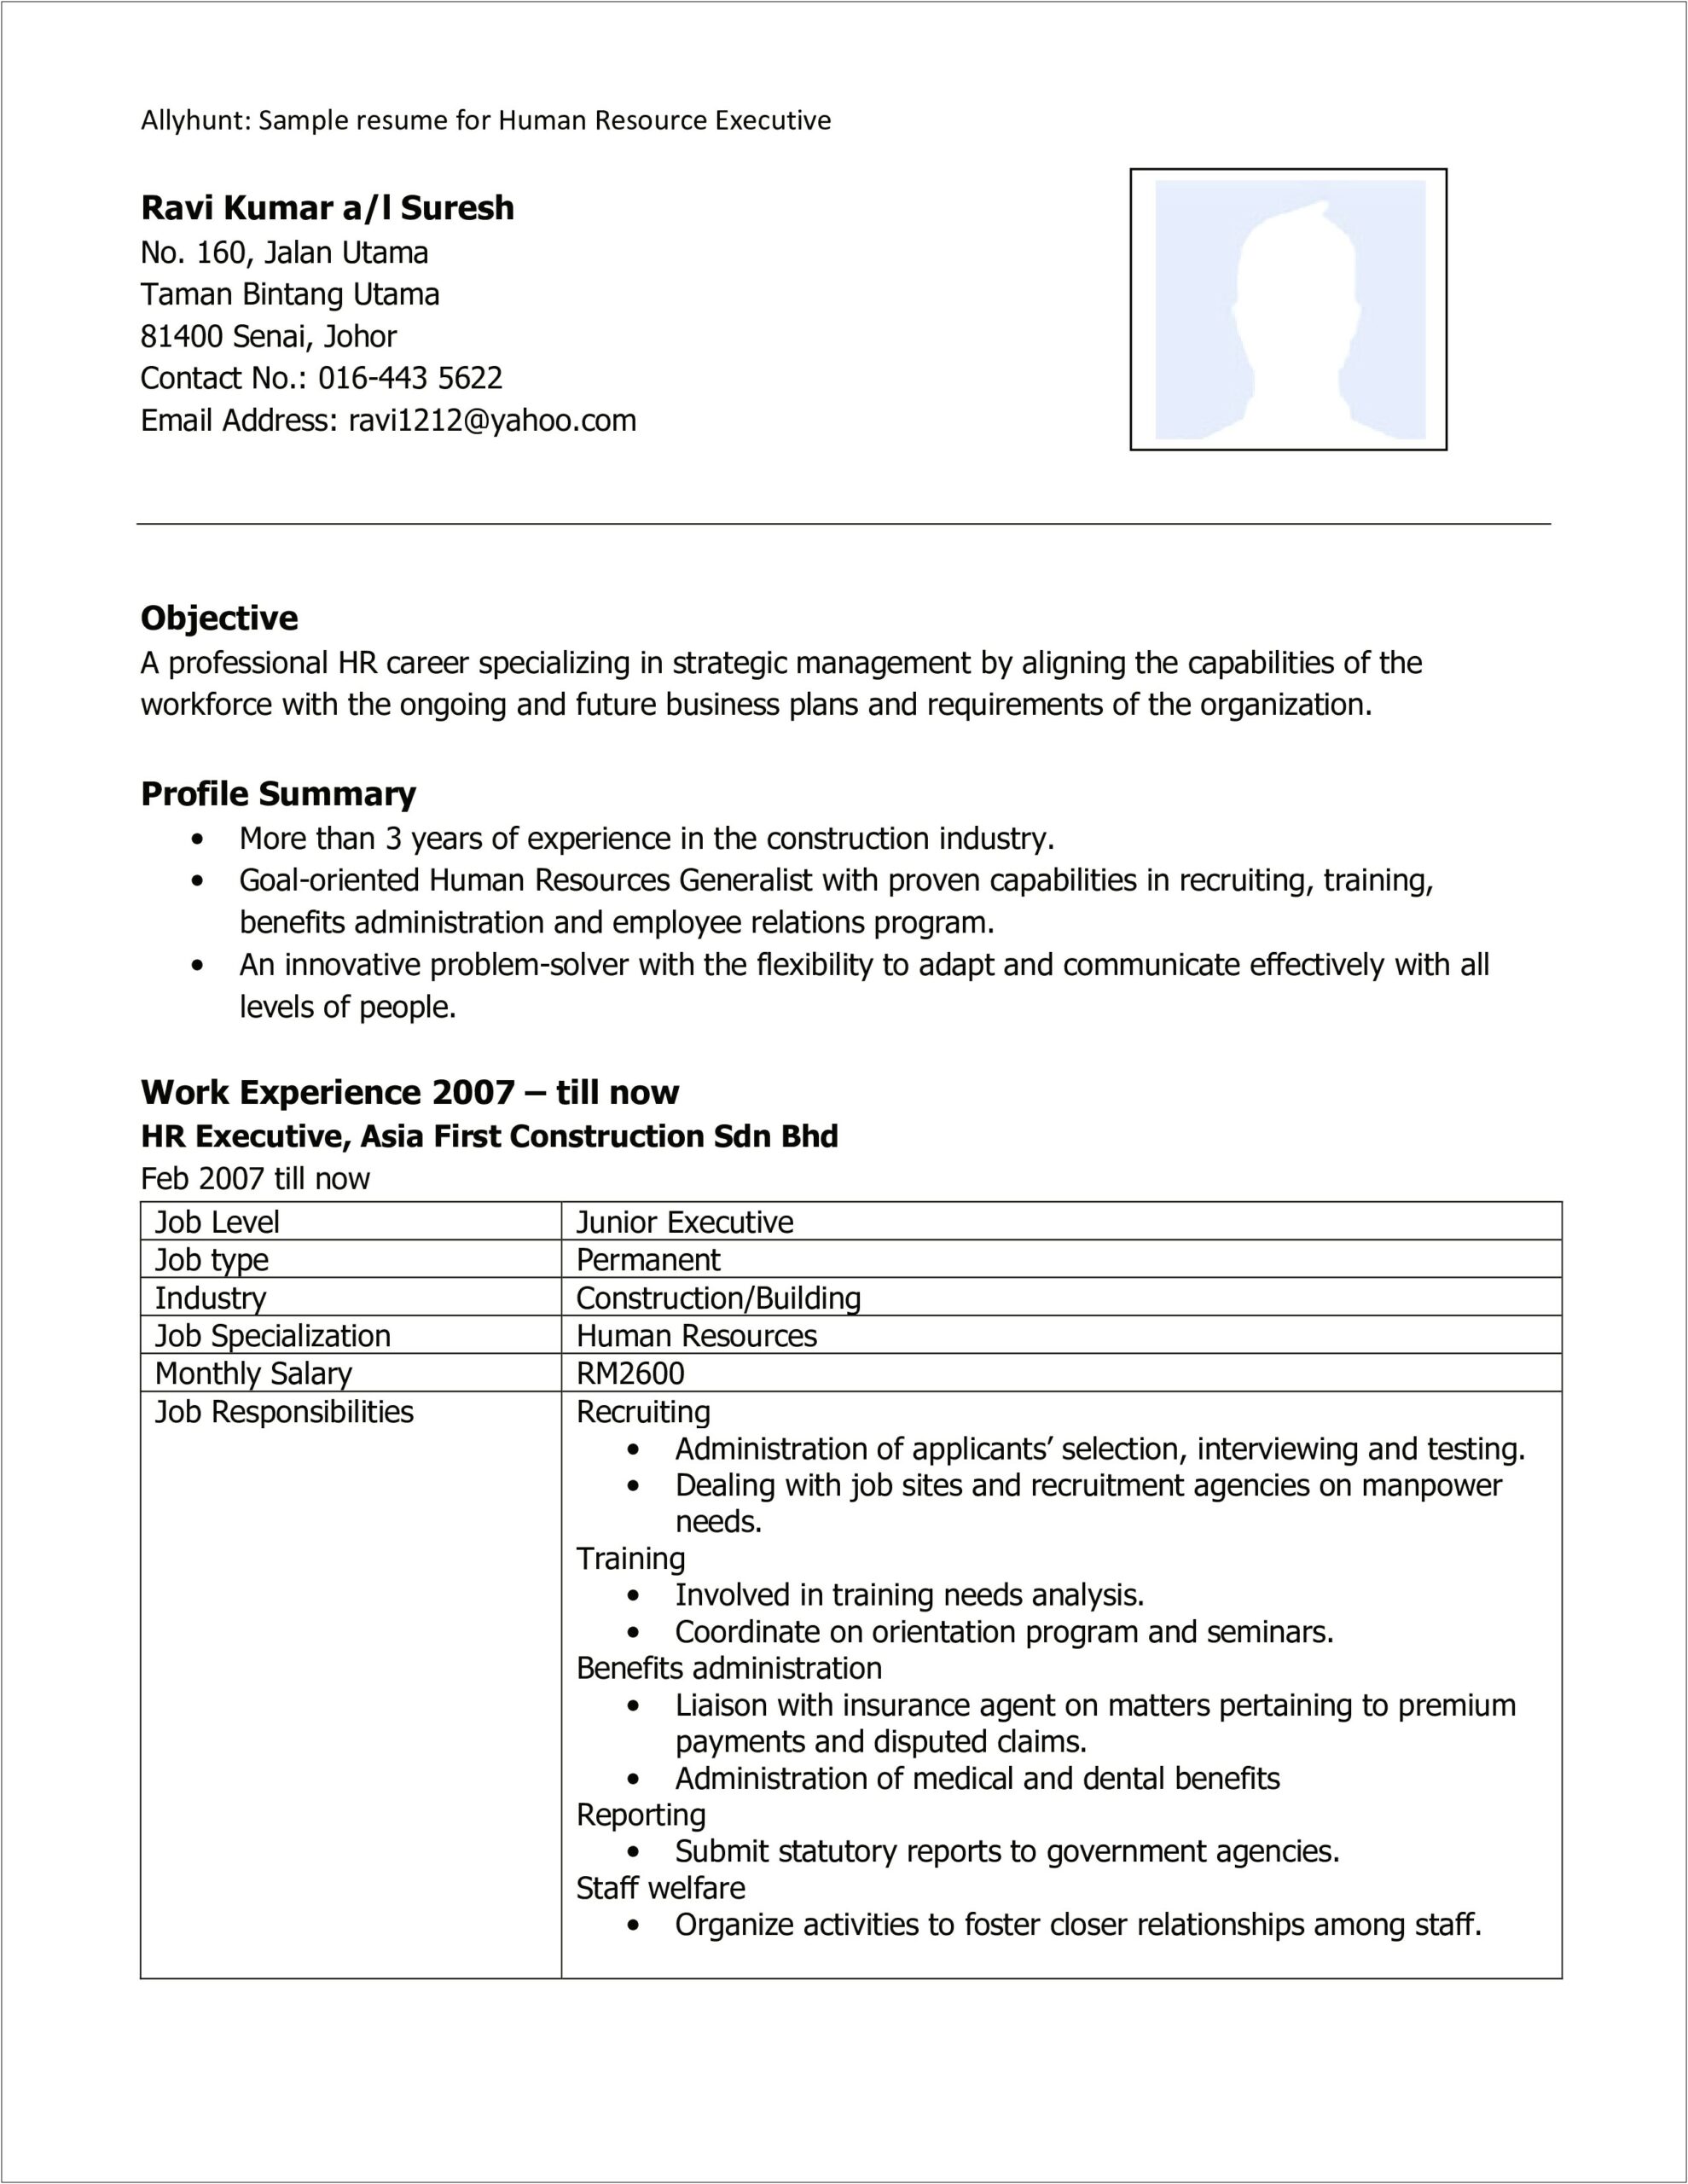 Human Resources Executive Sample Resume